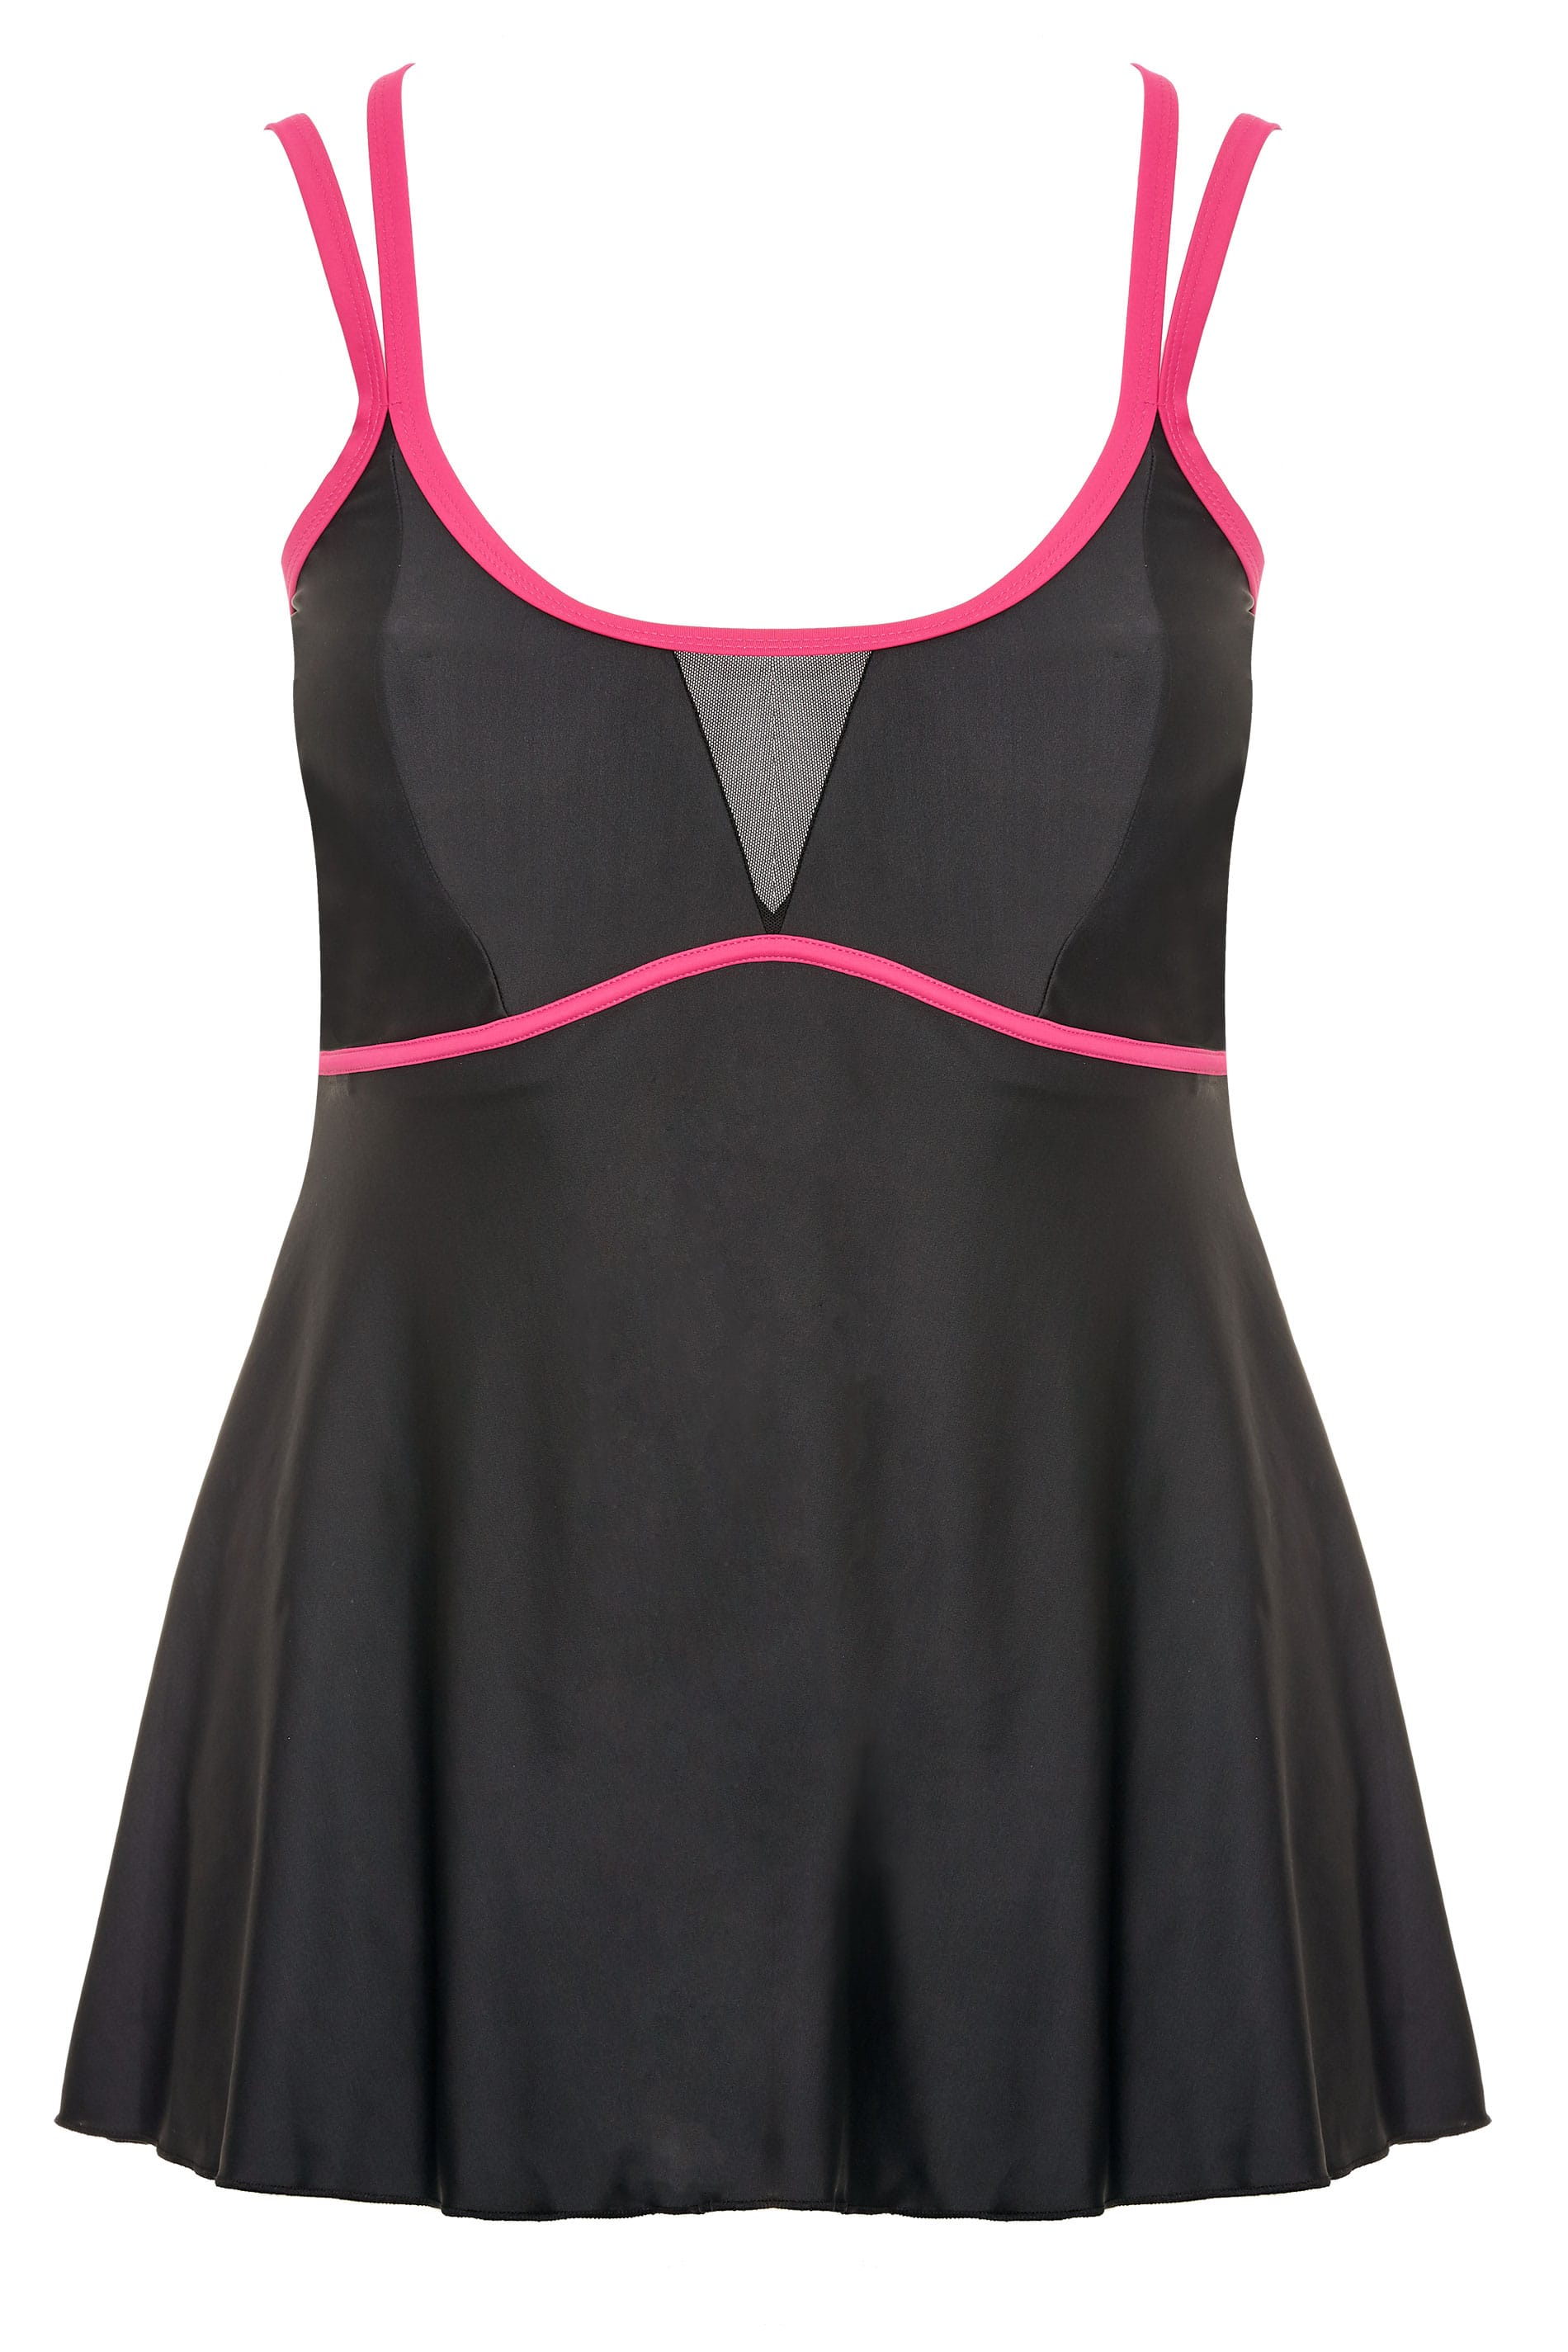 Black & Pink Trim Swim Dress | Yours Clothing